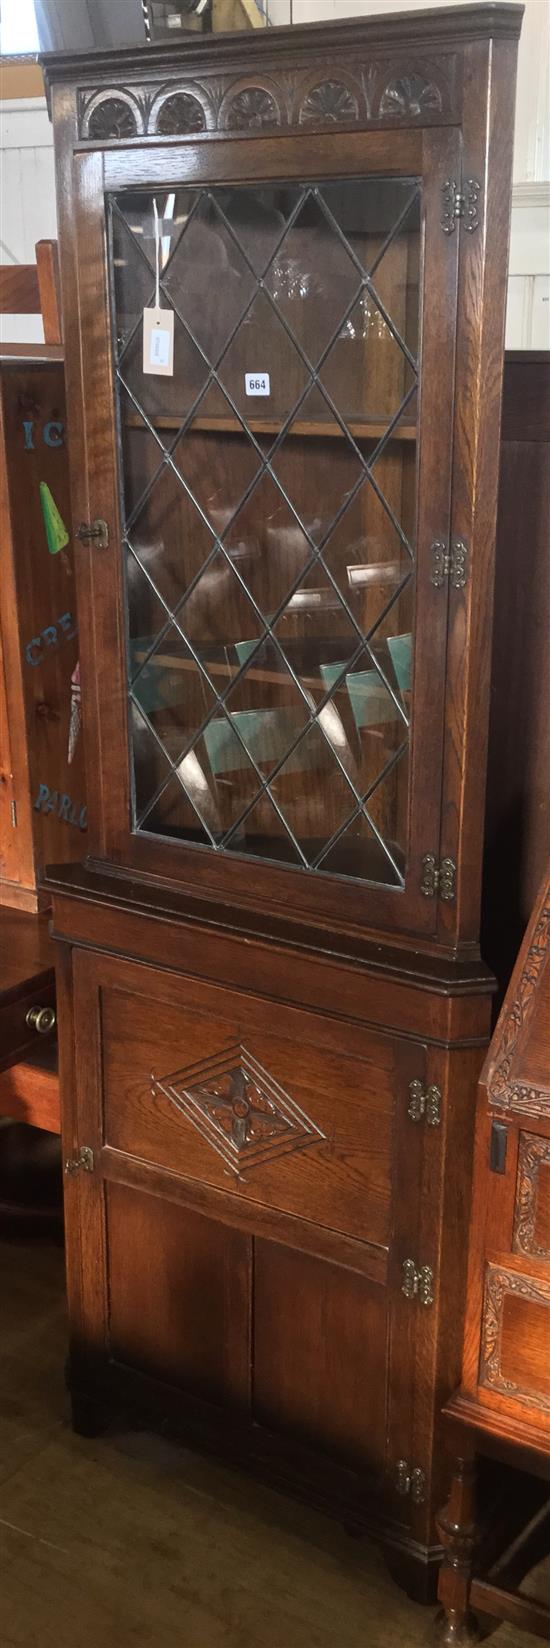 Reproduction carved oak corner display cabinet